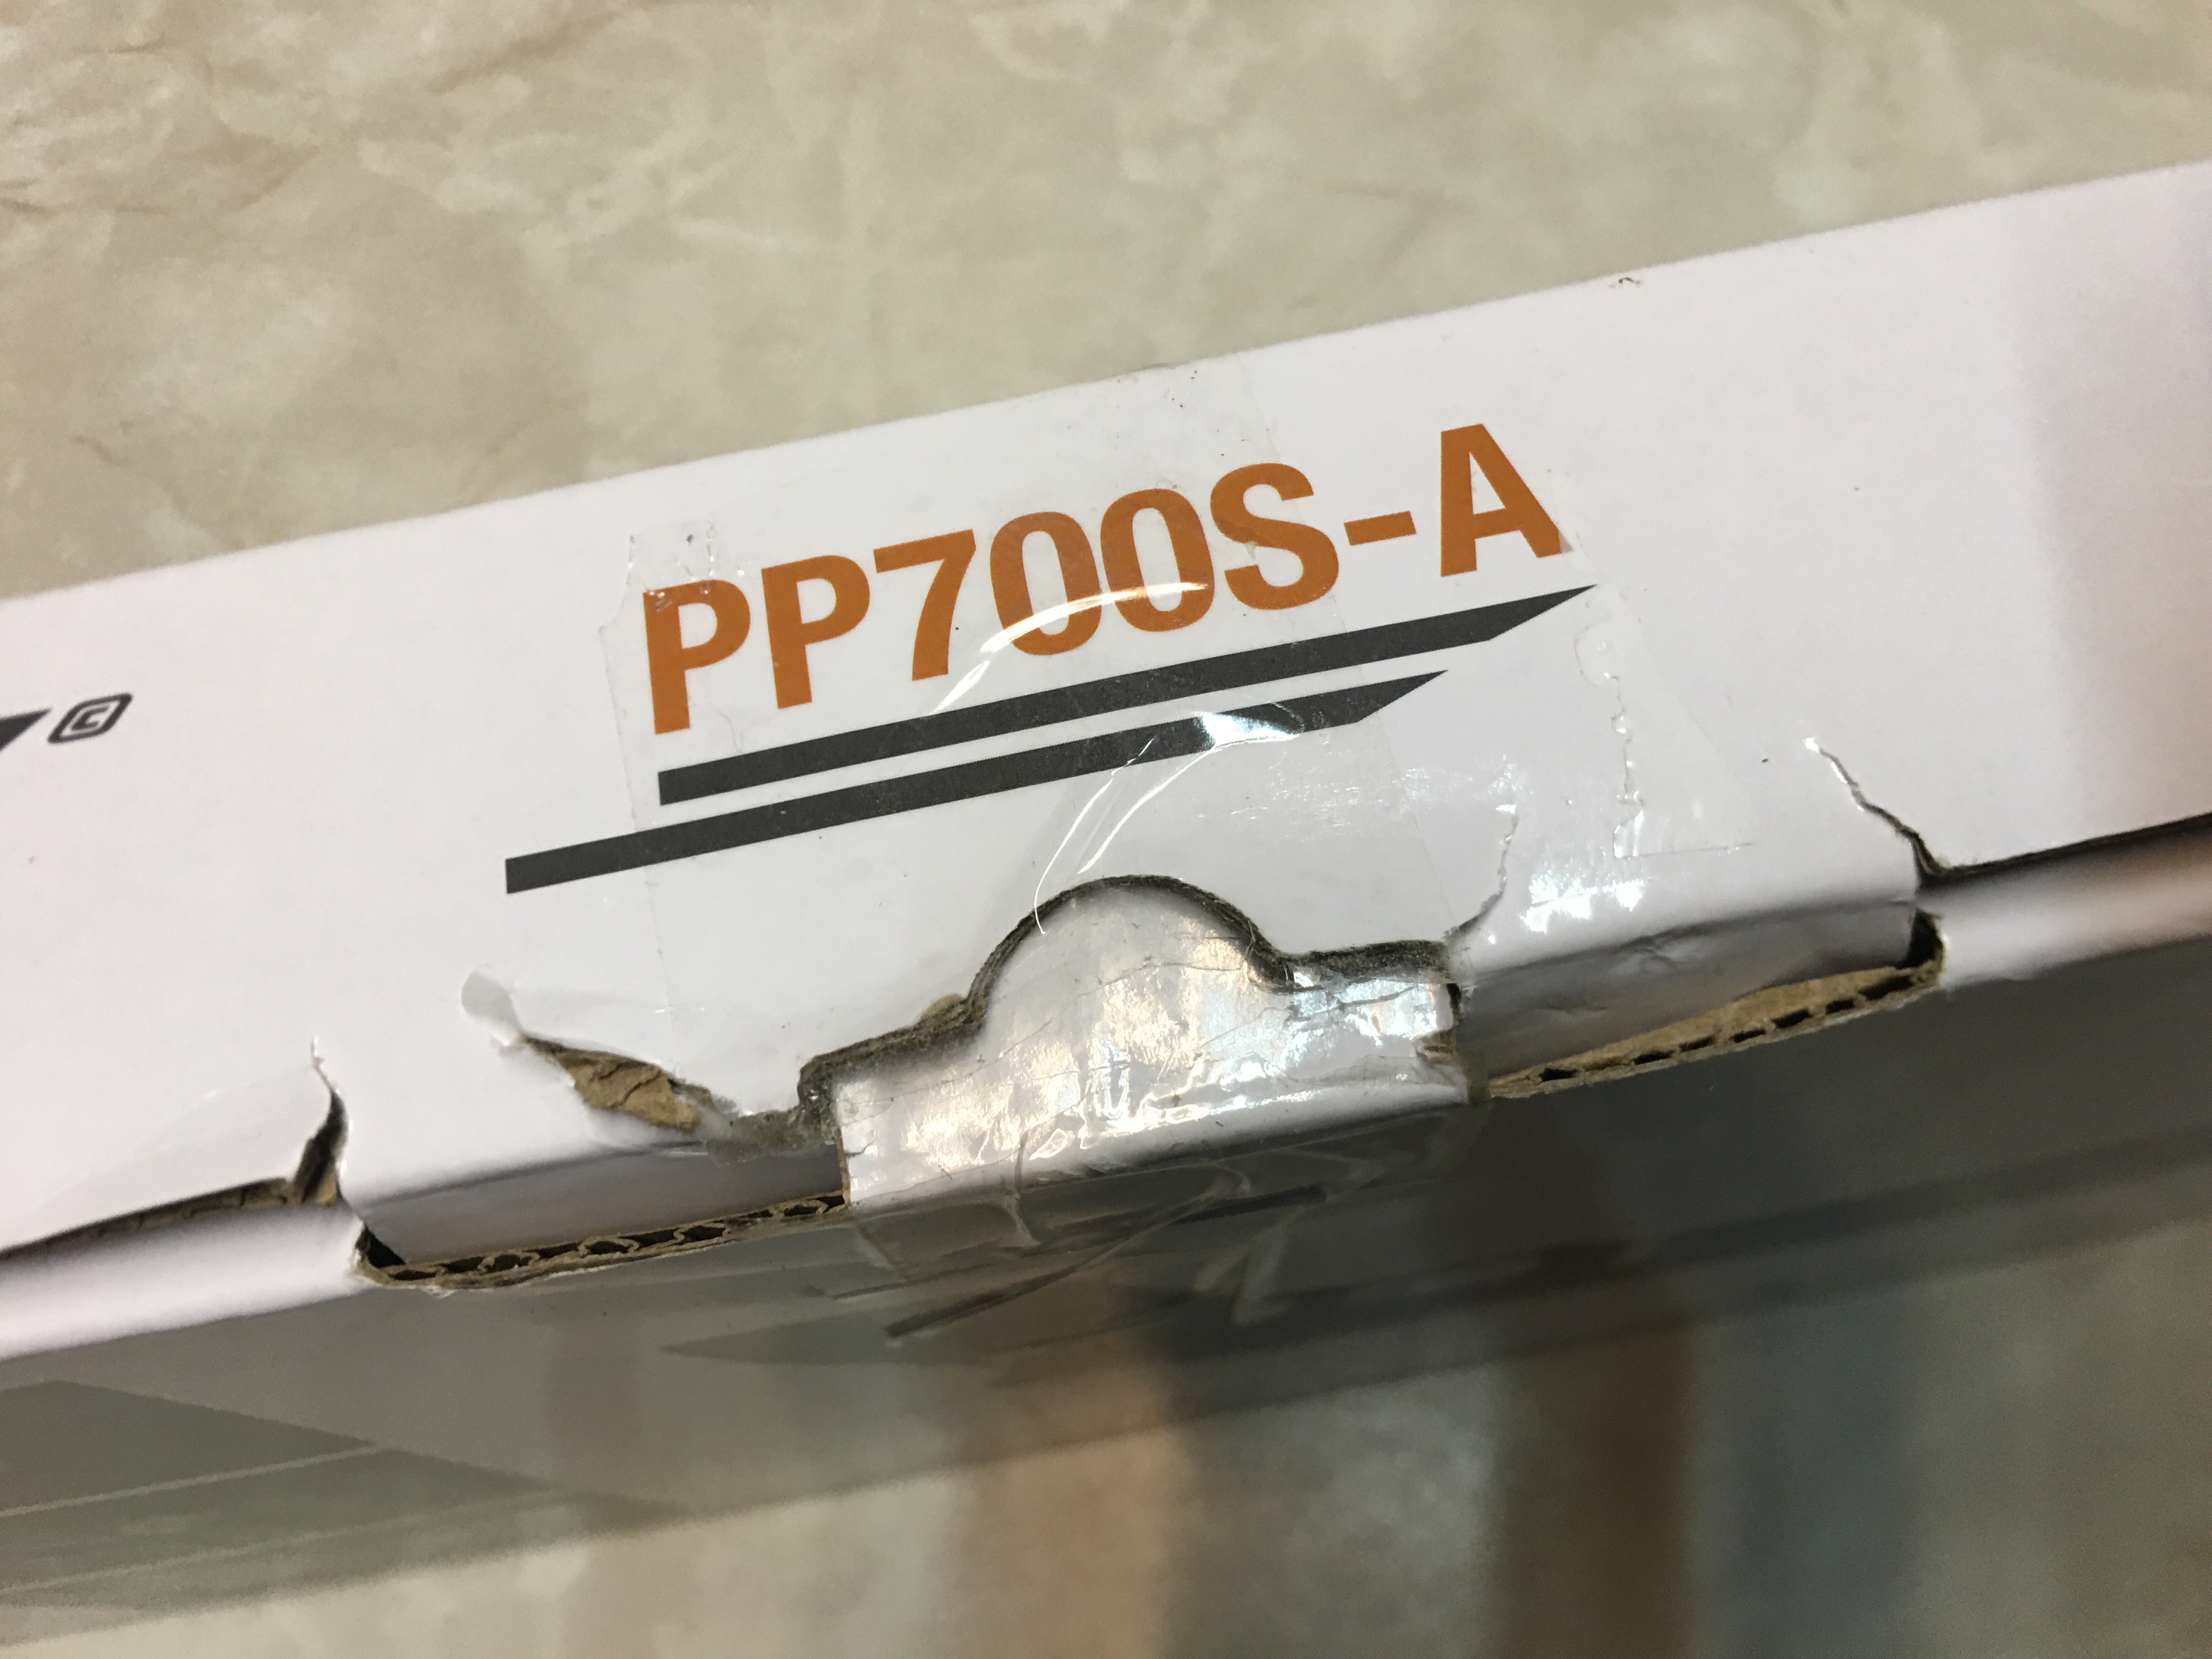 Pressluftpistole airmaX PP700S-A, Kaliber 4,5mm mit beschädigter Umverpackung